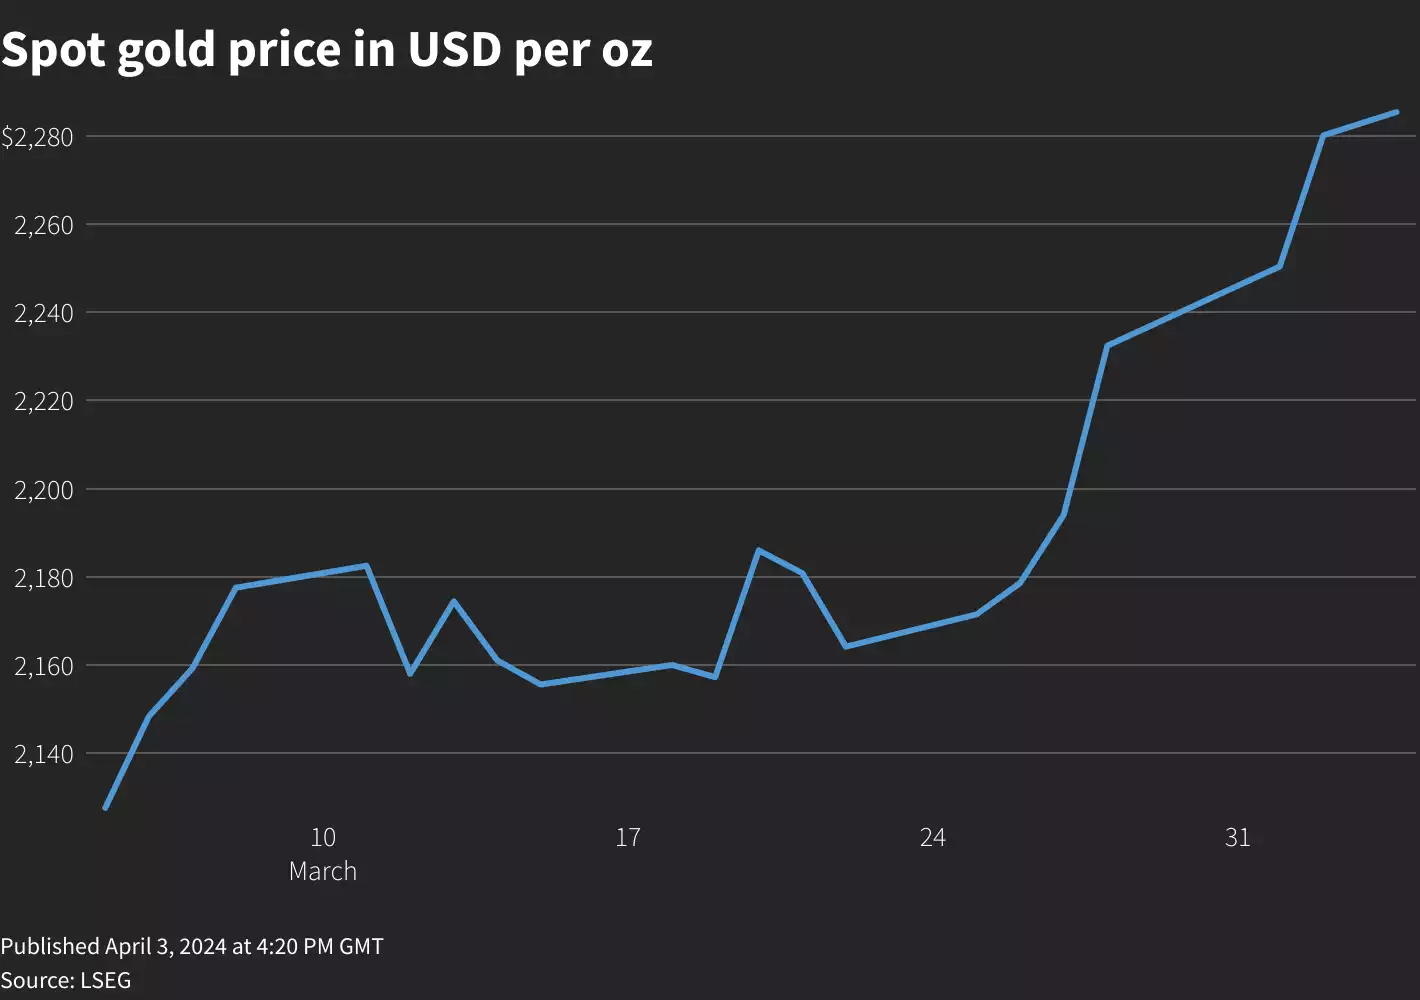 Gold spot price in USD per oz